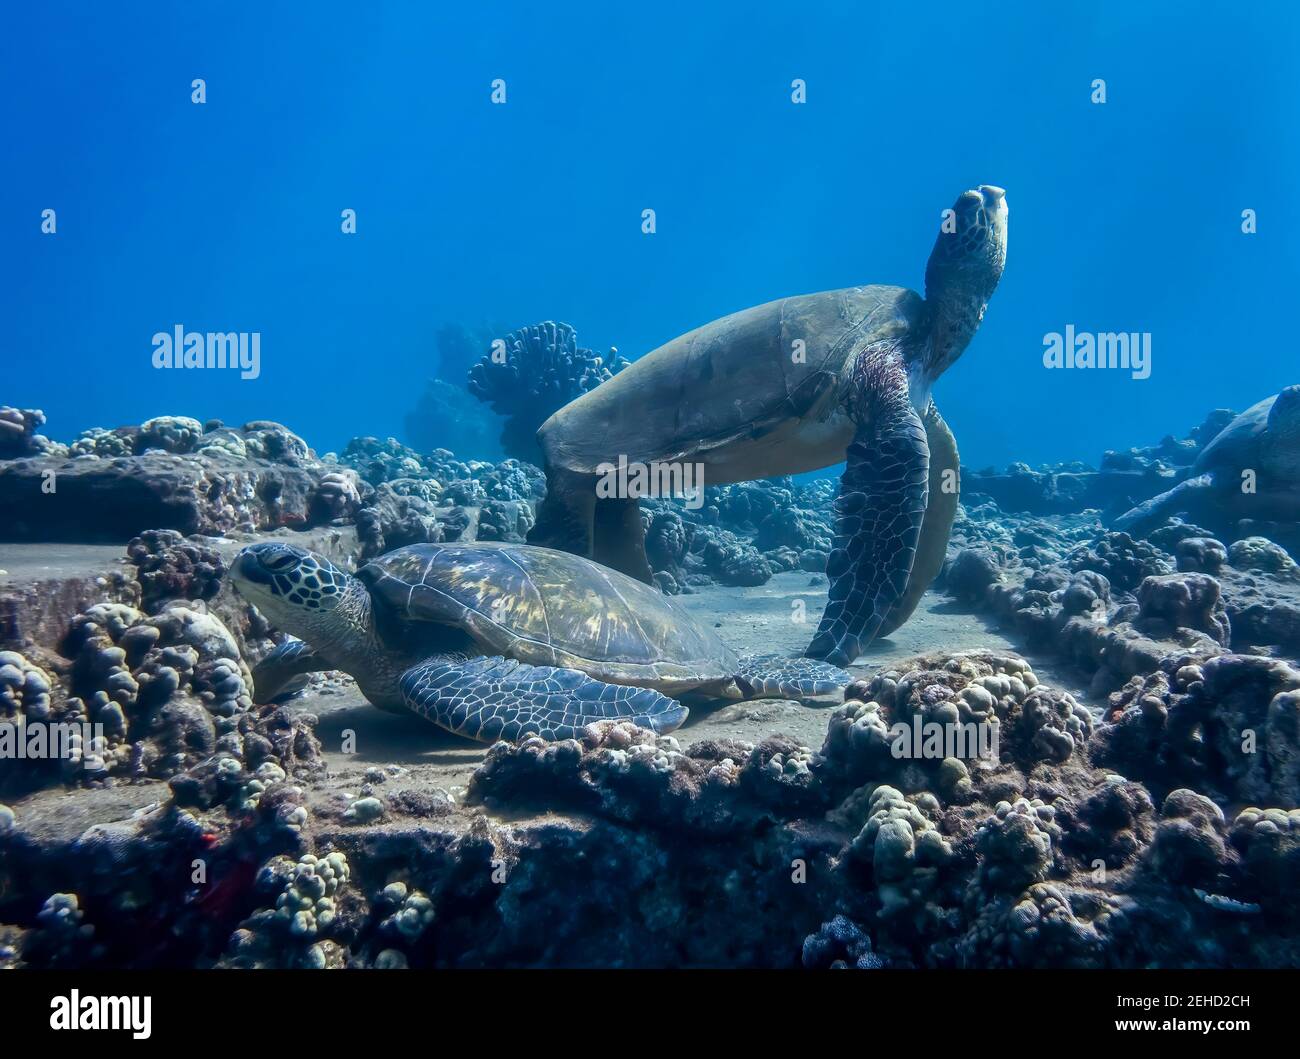 Hawaiian green sea turtles gathered on underwater coral reef in tropical ocean. Stock Photo